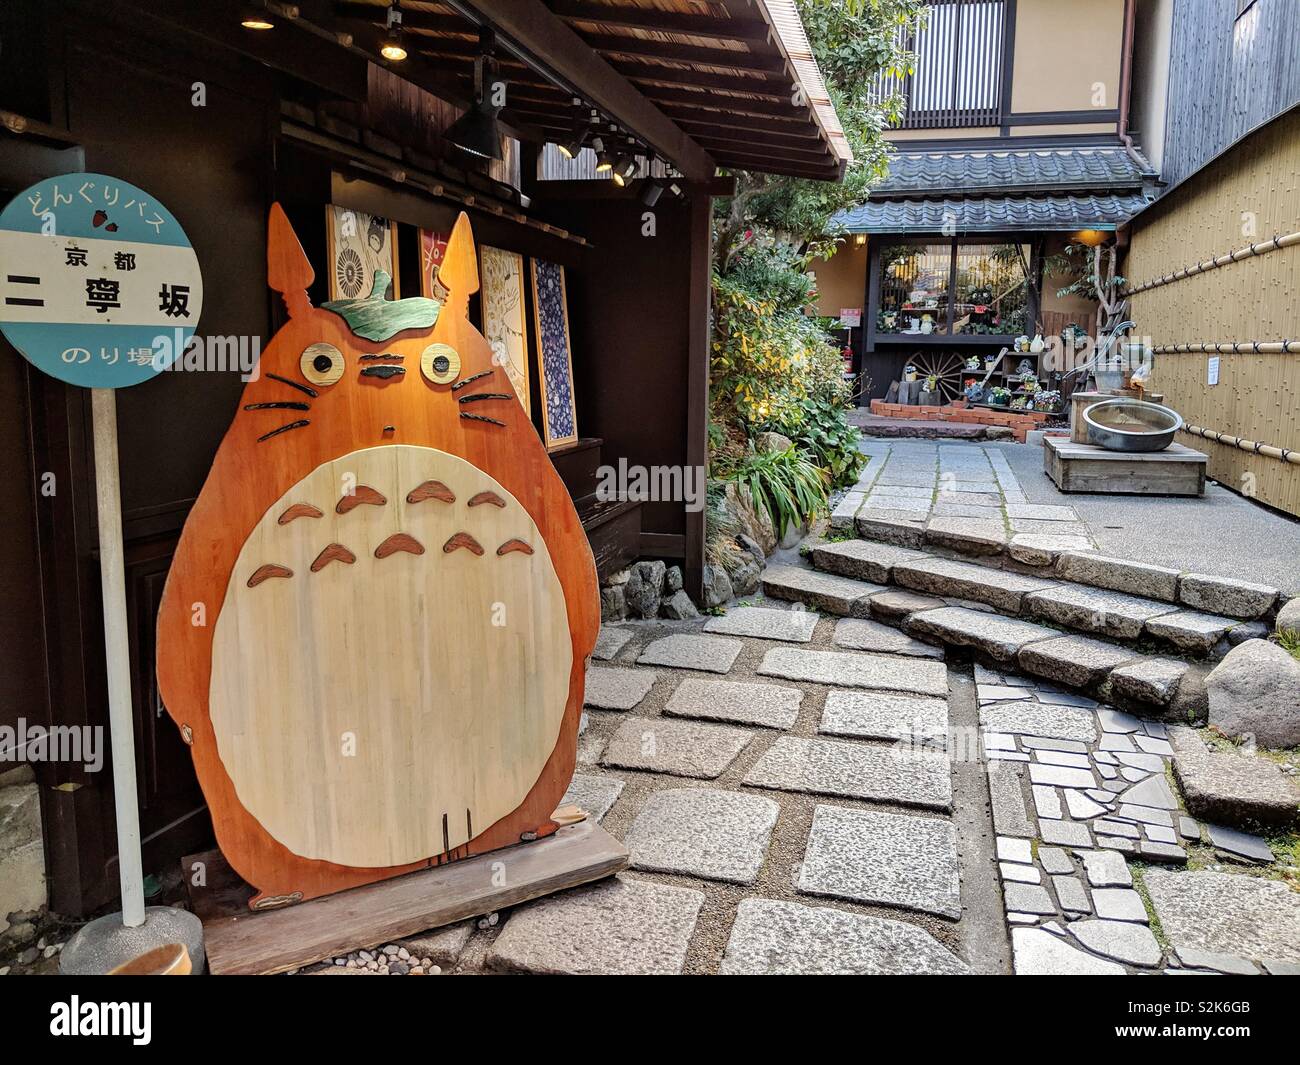 Toyota bus stop signage outside Ghibli anime shop at Ninenzaka Kyoto,Japan  Stock Photo - Alamy